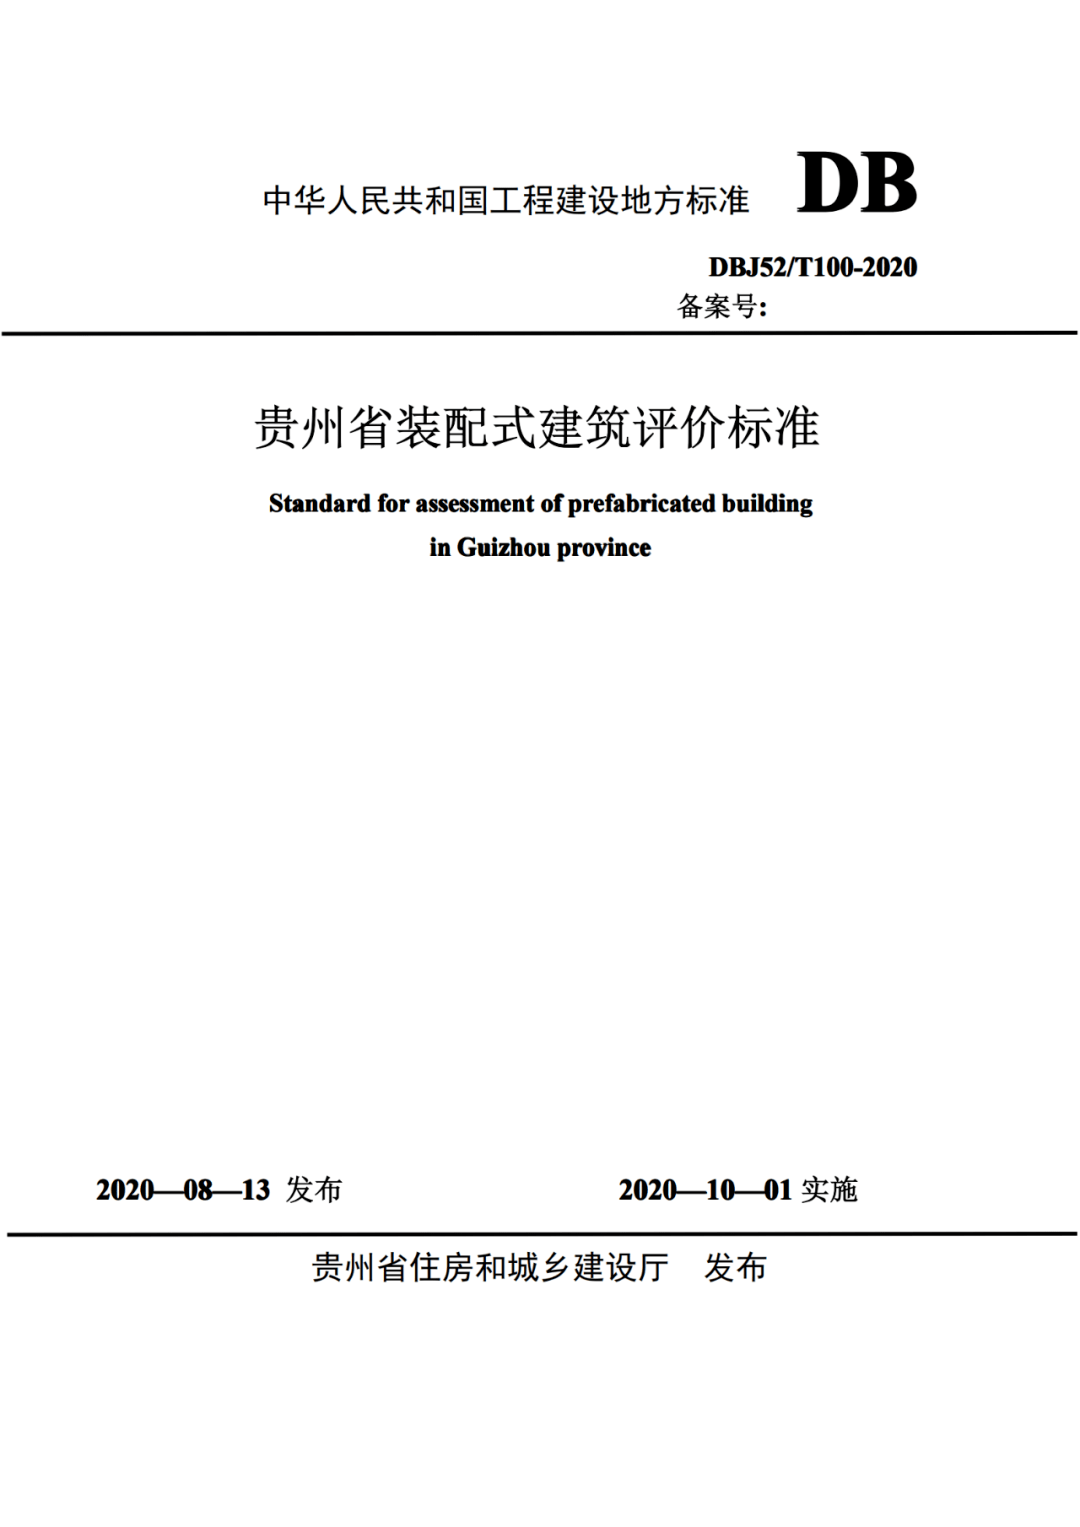 jbo竞博官网-
《贵州省装配式修建评价尺度》公布 10月1日起实施(图1)